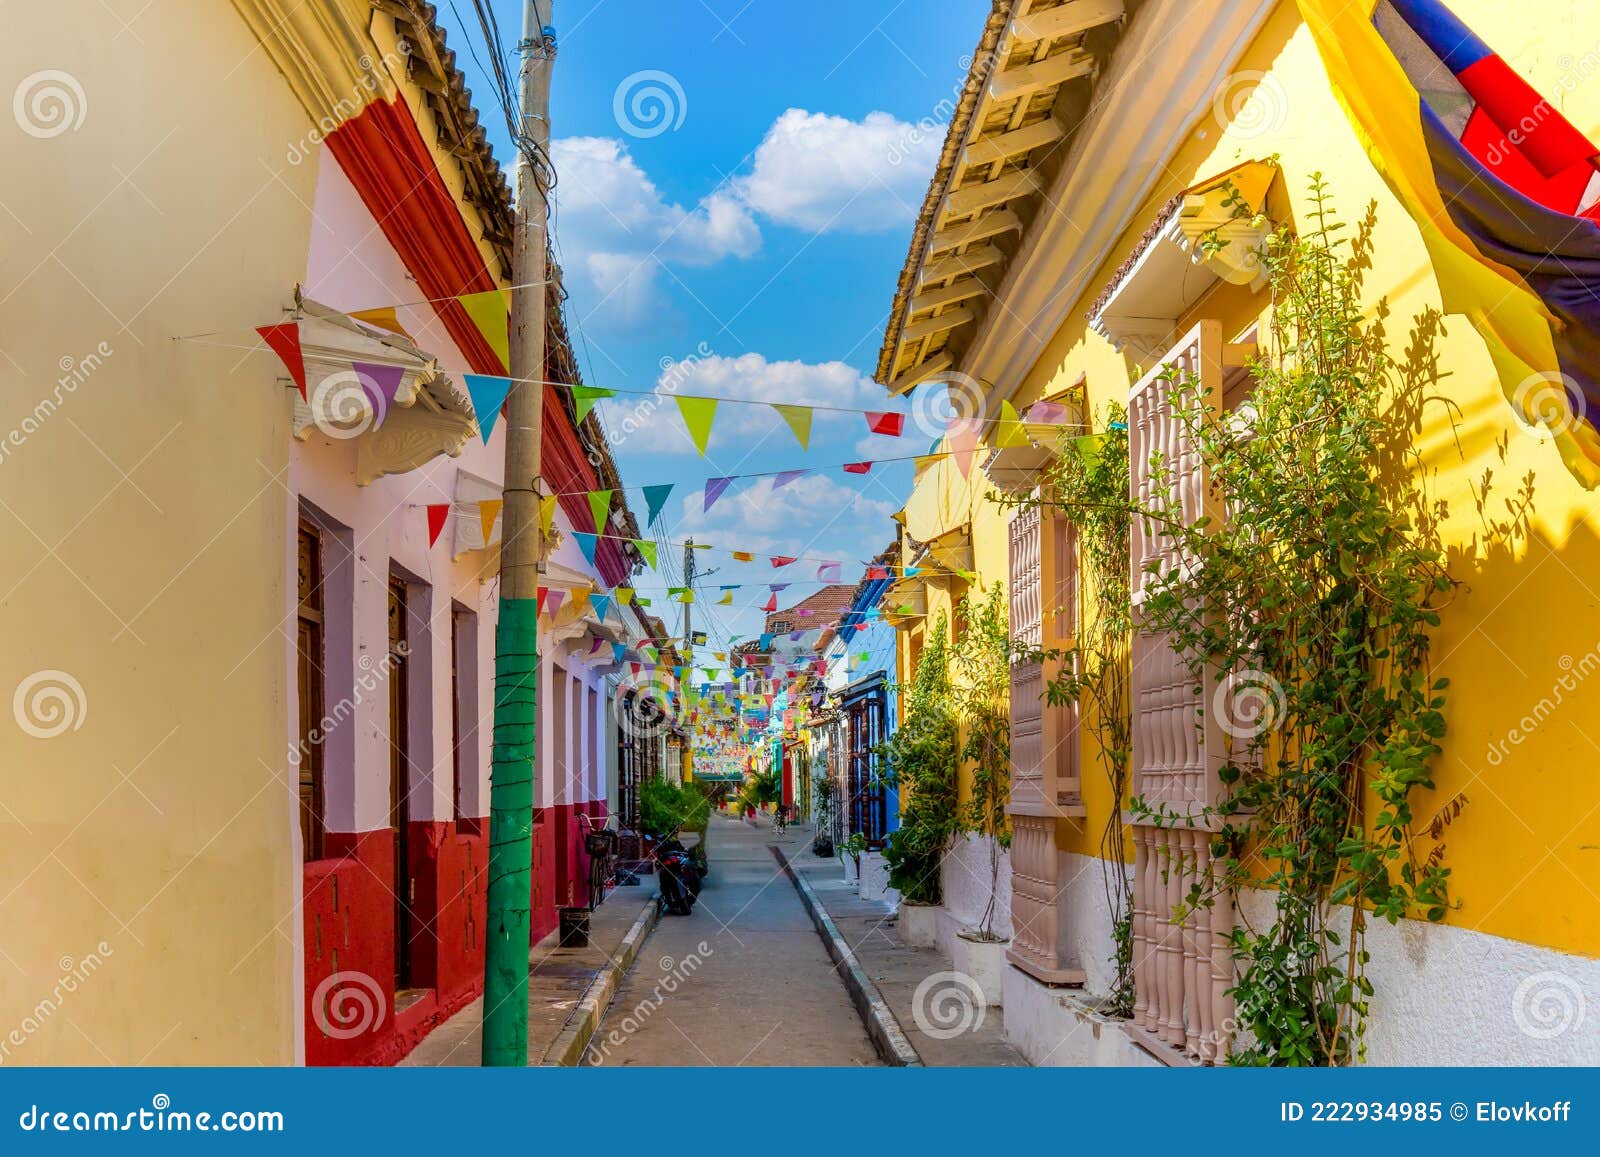 colombia, scenic colorful streets of cartagena in historic getsemani district near walled city, ciudad amurallada, a